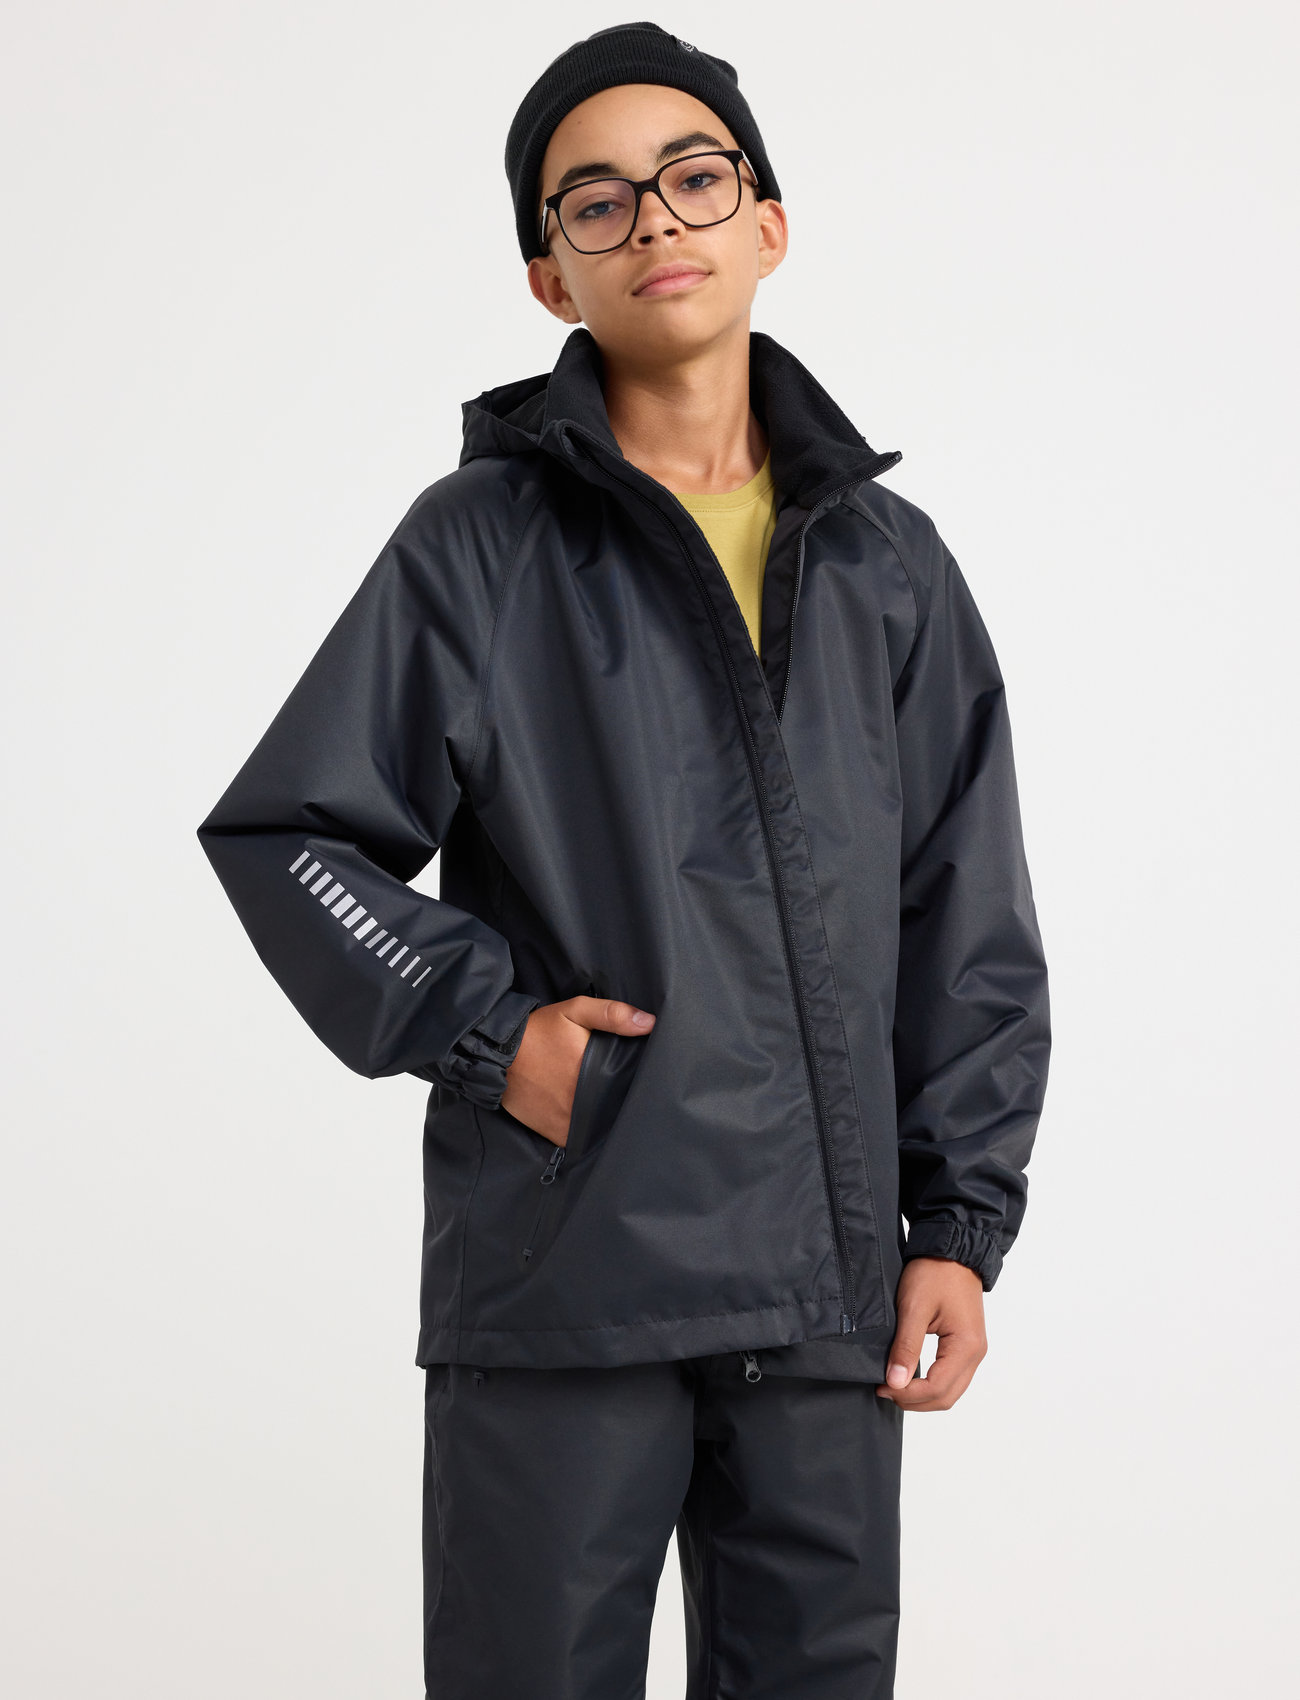 Lindex - Rain jacket school kids - vestes de pluie - black - 0